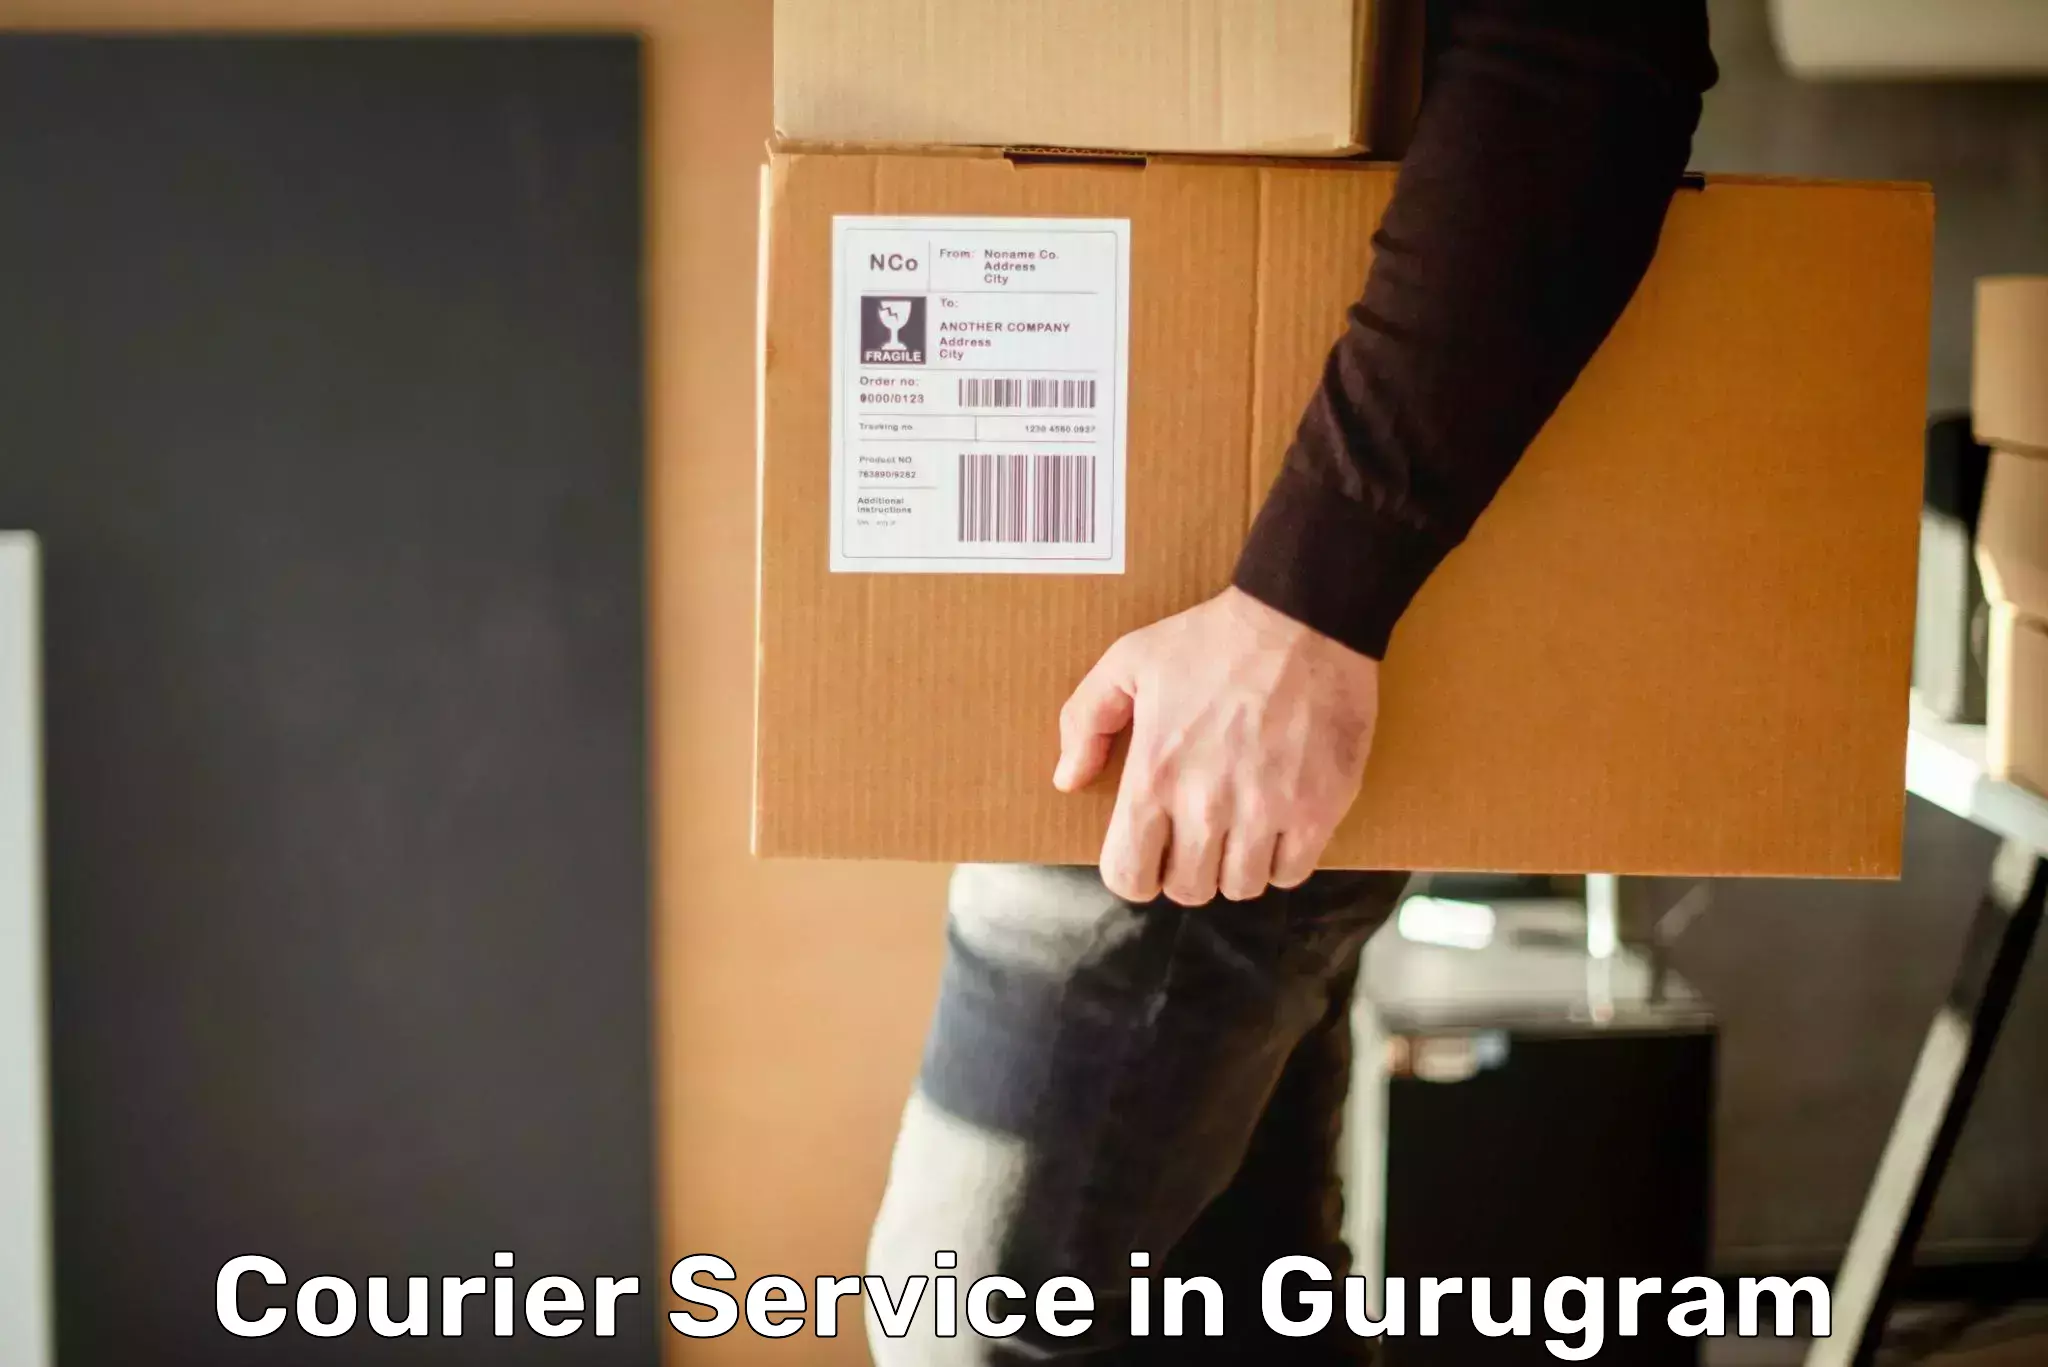 Efficient order fulfillment in Gurugram